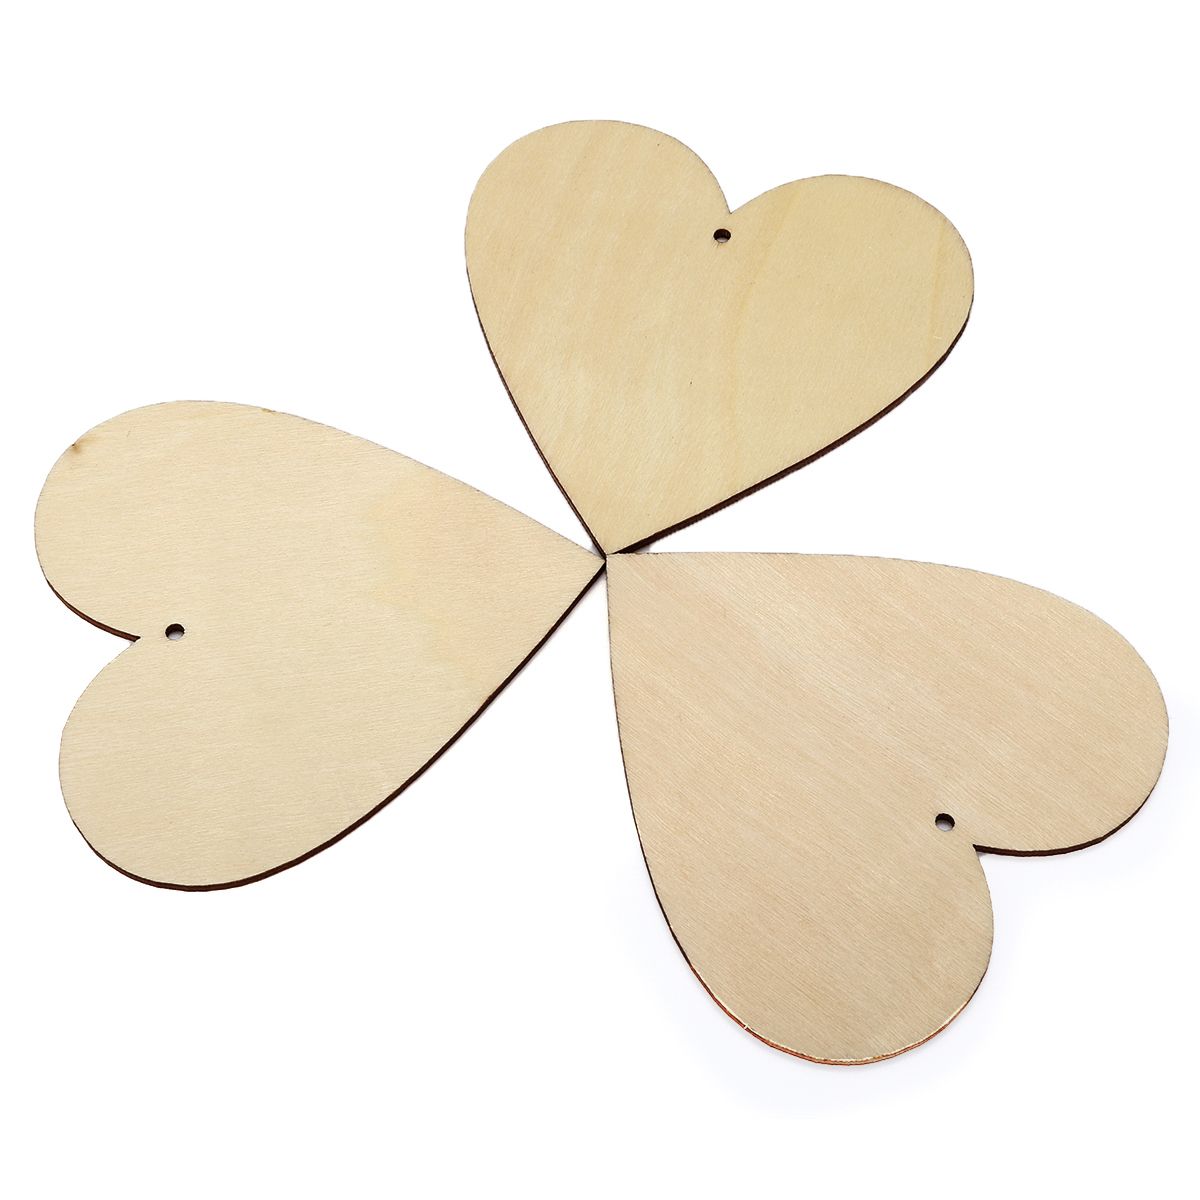 5Pcs-100mm-Heart-Wooden-Board-Tags-Laser-Engraving-Sheet-DIY-Wood-Craft-Wedding-Christmas-Decoration-1401481